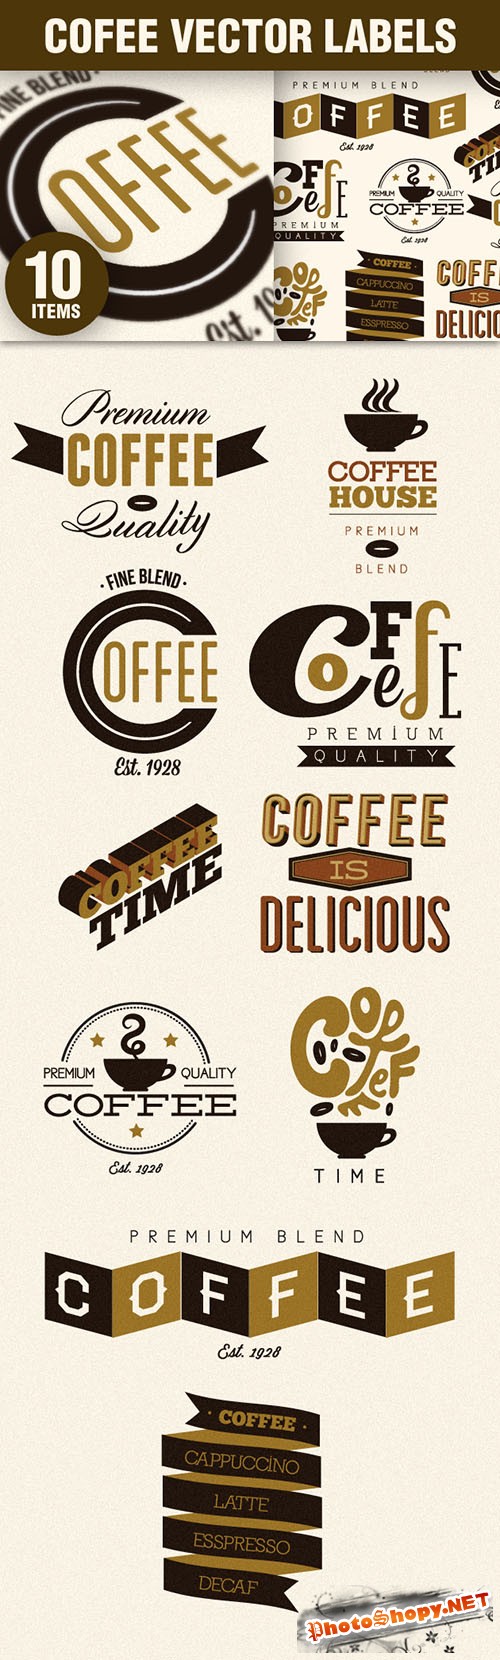 Designtnt - Coffee Labels Badges Vector Set